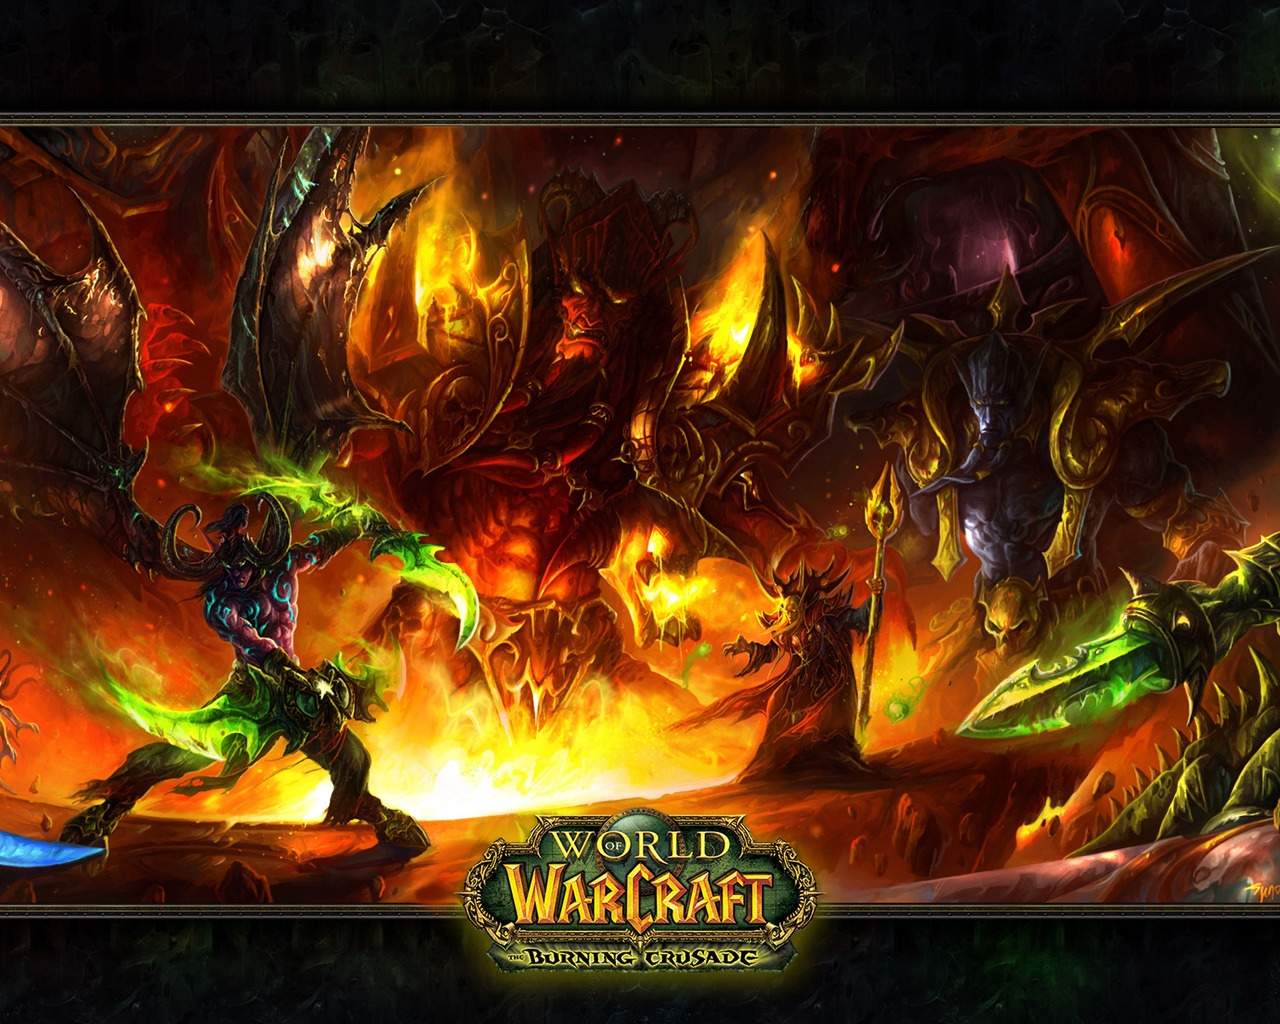 World of Warcraft Burning Crusade for 1280 x 1024 resolution